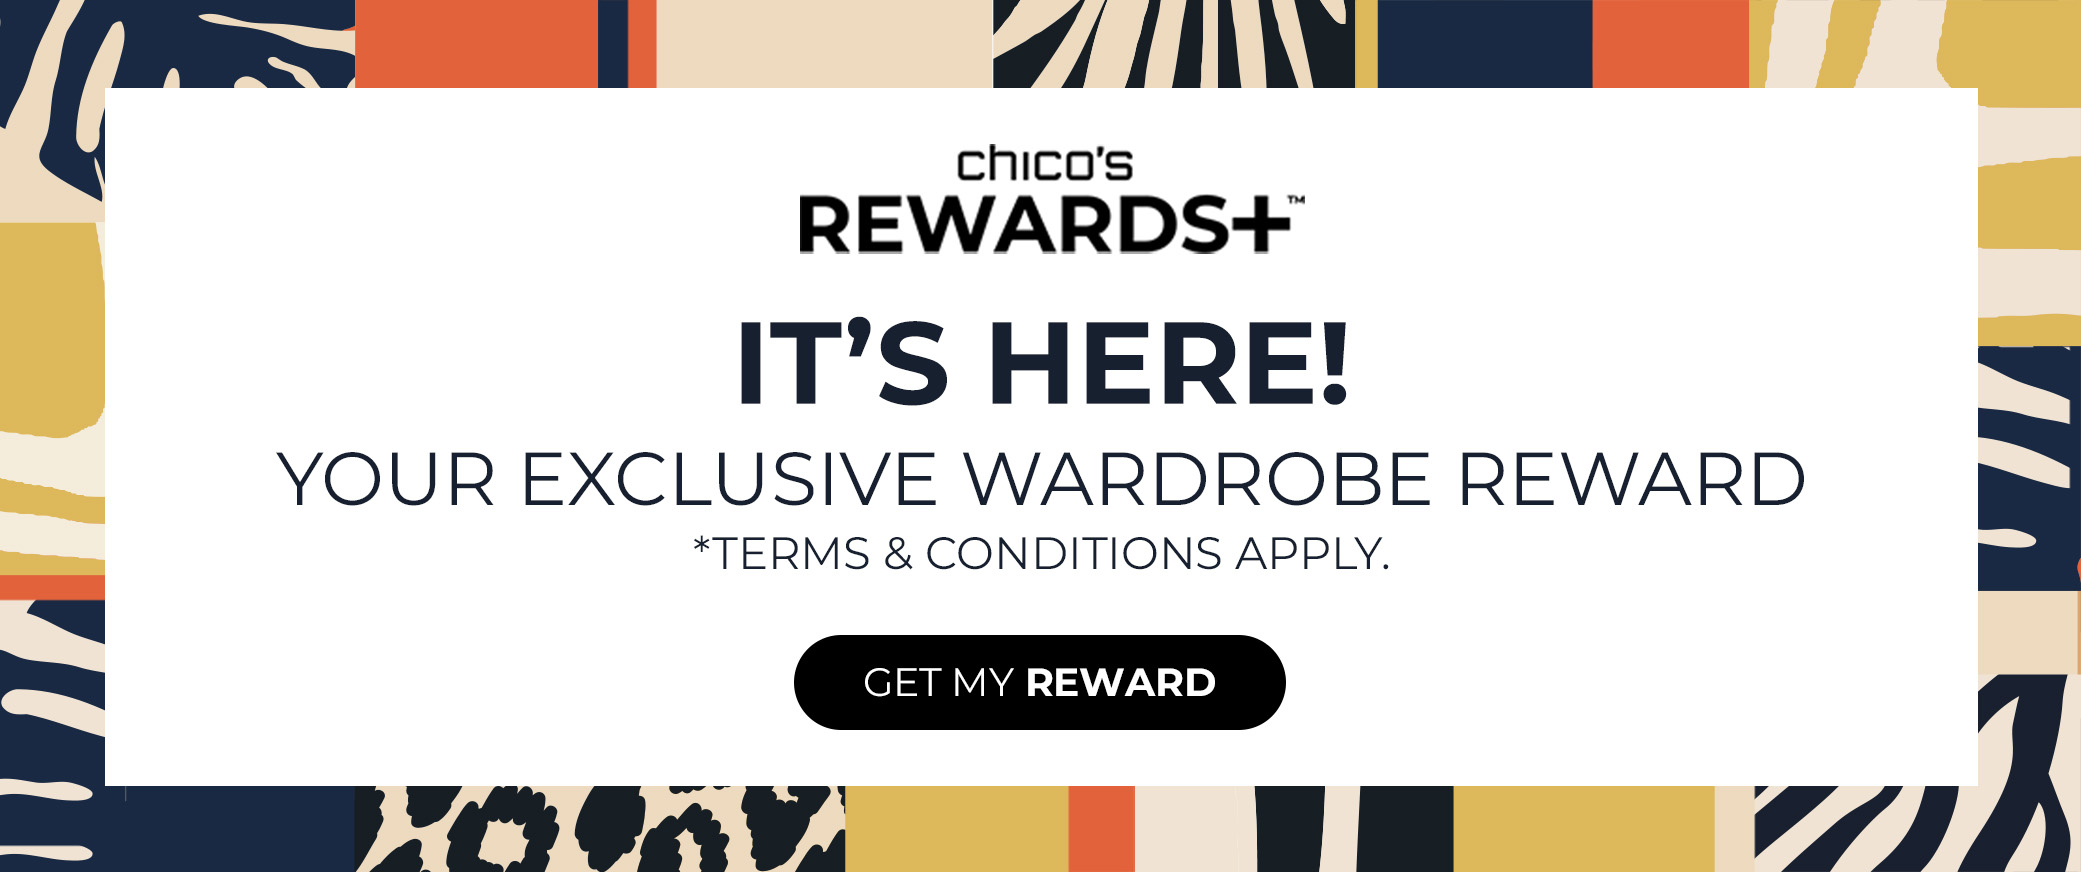 Chicos Rewards+ It's Here! Your Exclusive Wardrobe Reward. Terms and Conditions Apply. Get My Reward